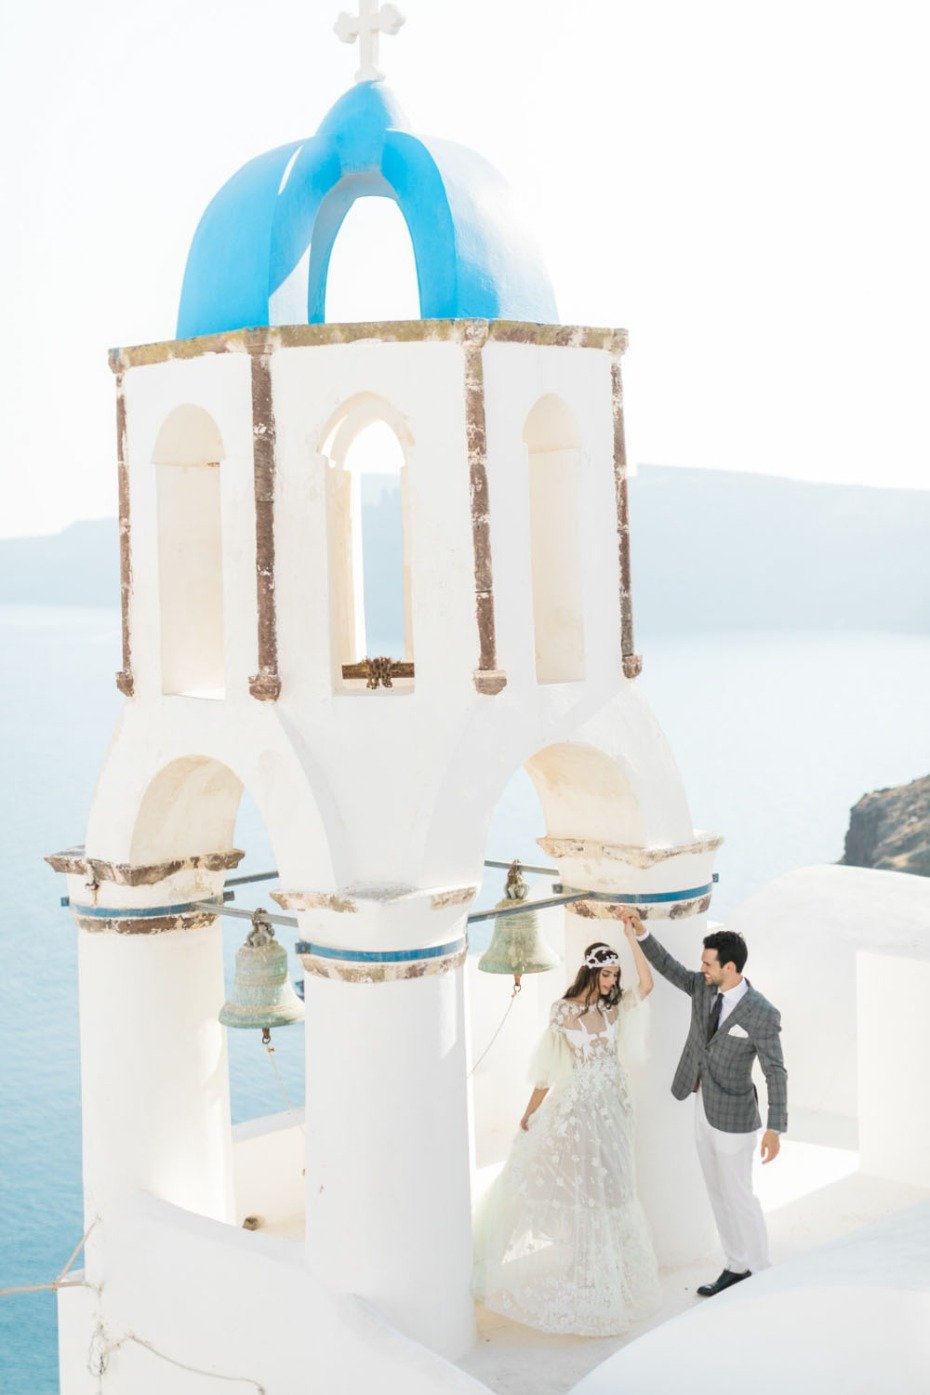 Get married in Santorini